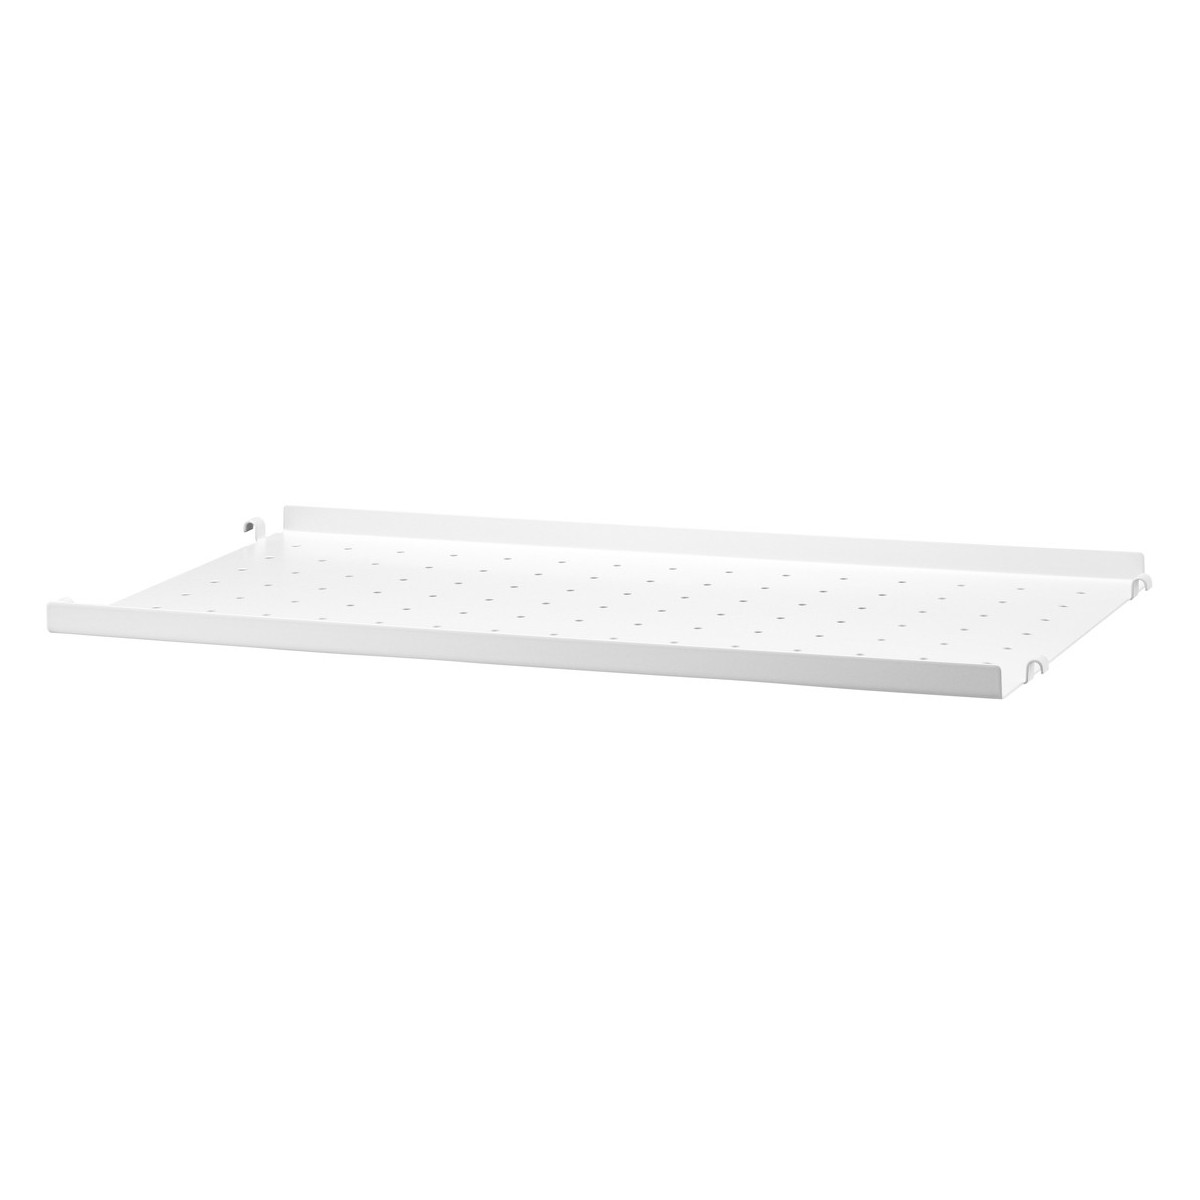 58x30cm - metal shelf, low edge - white